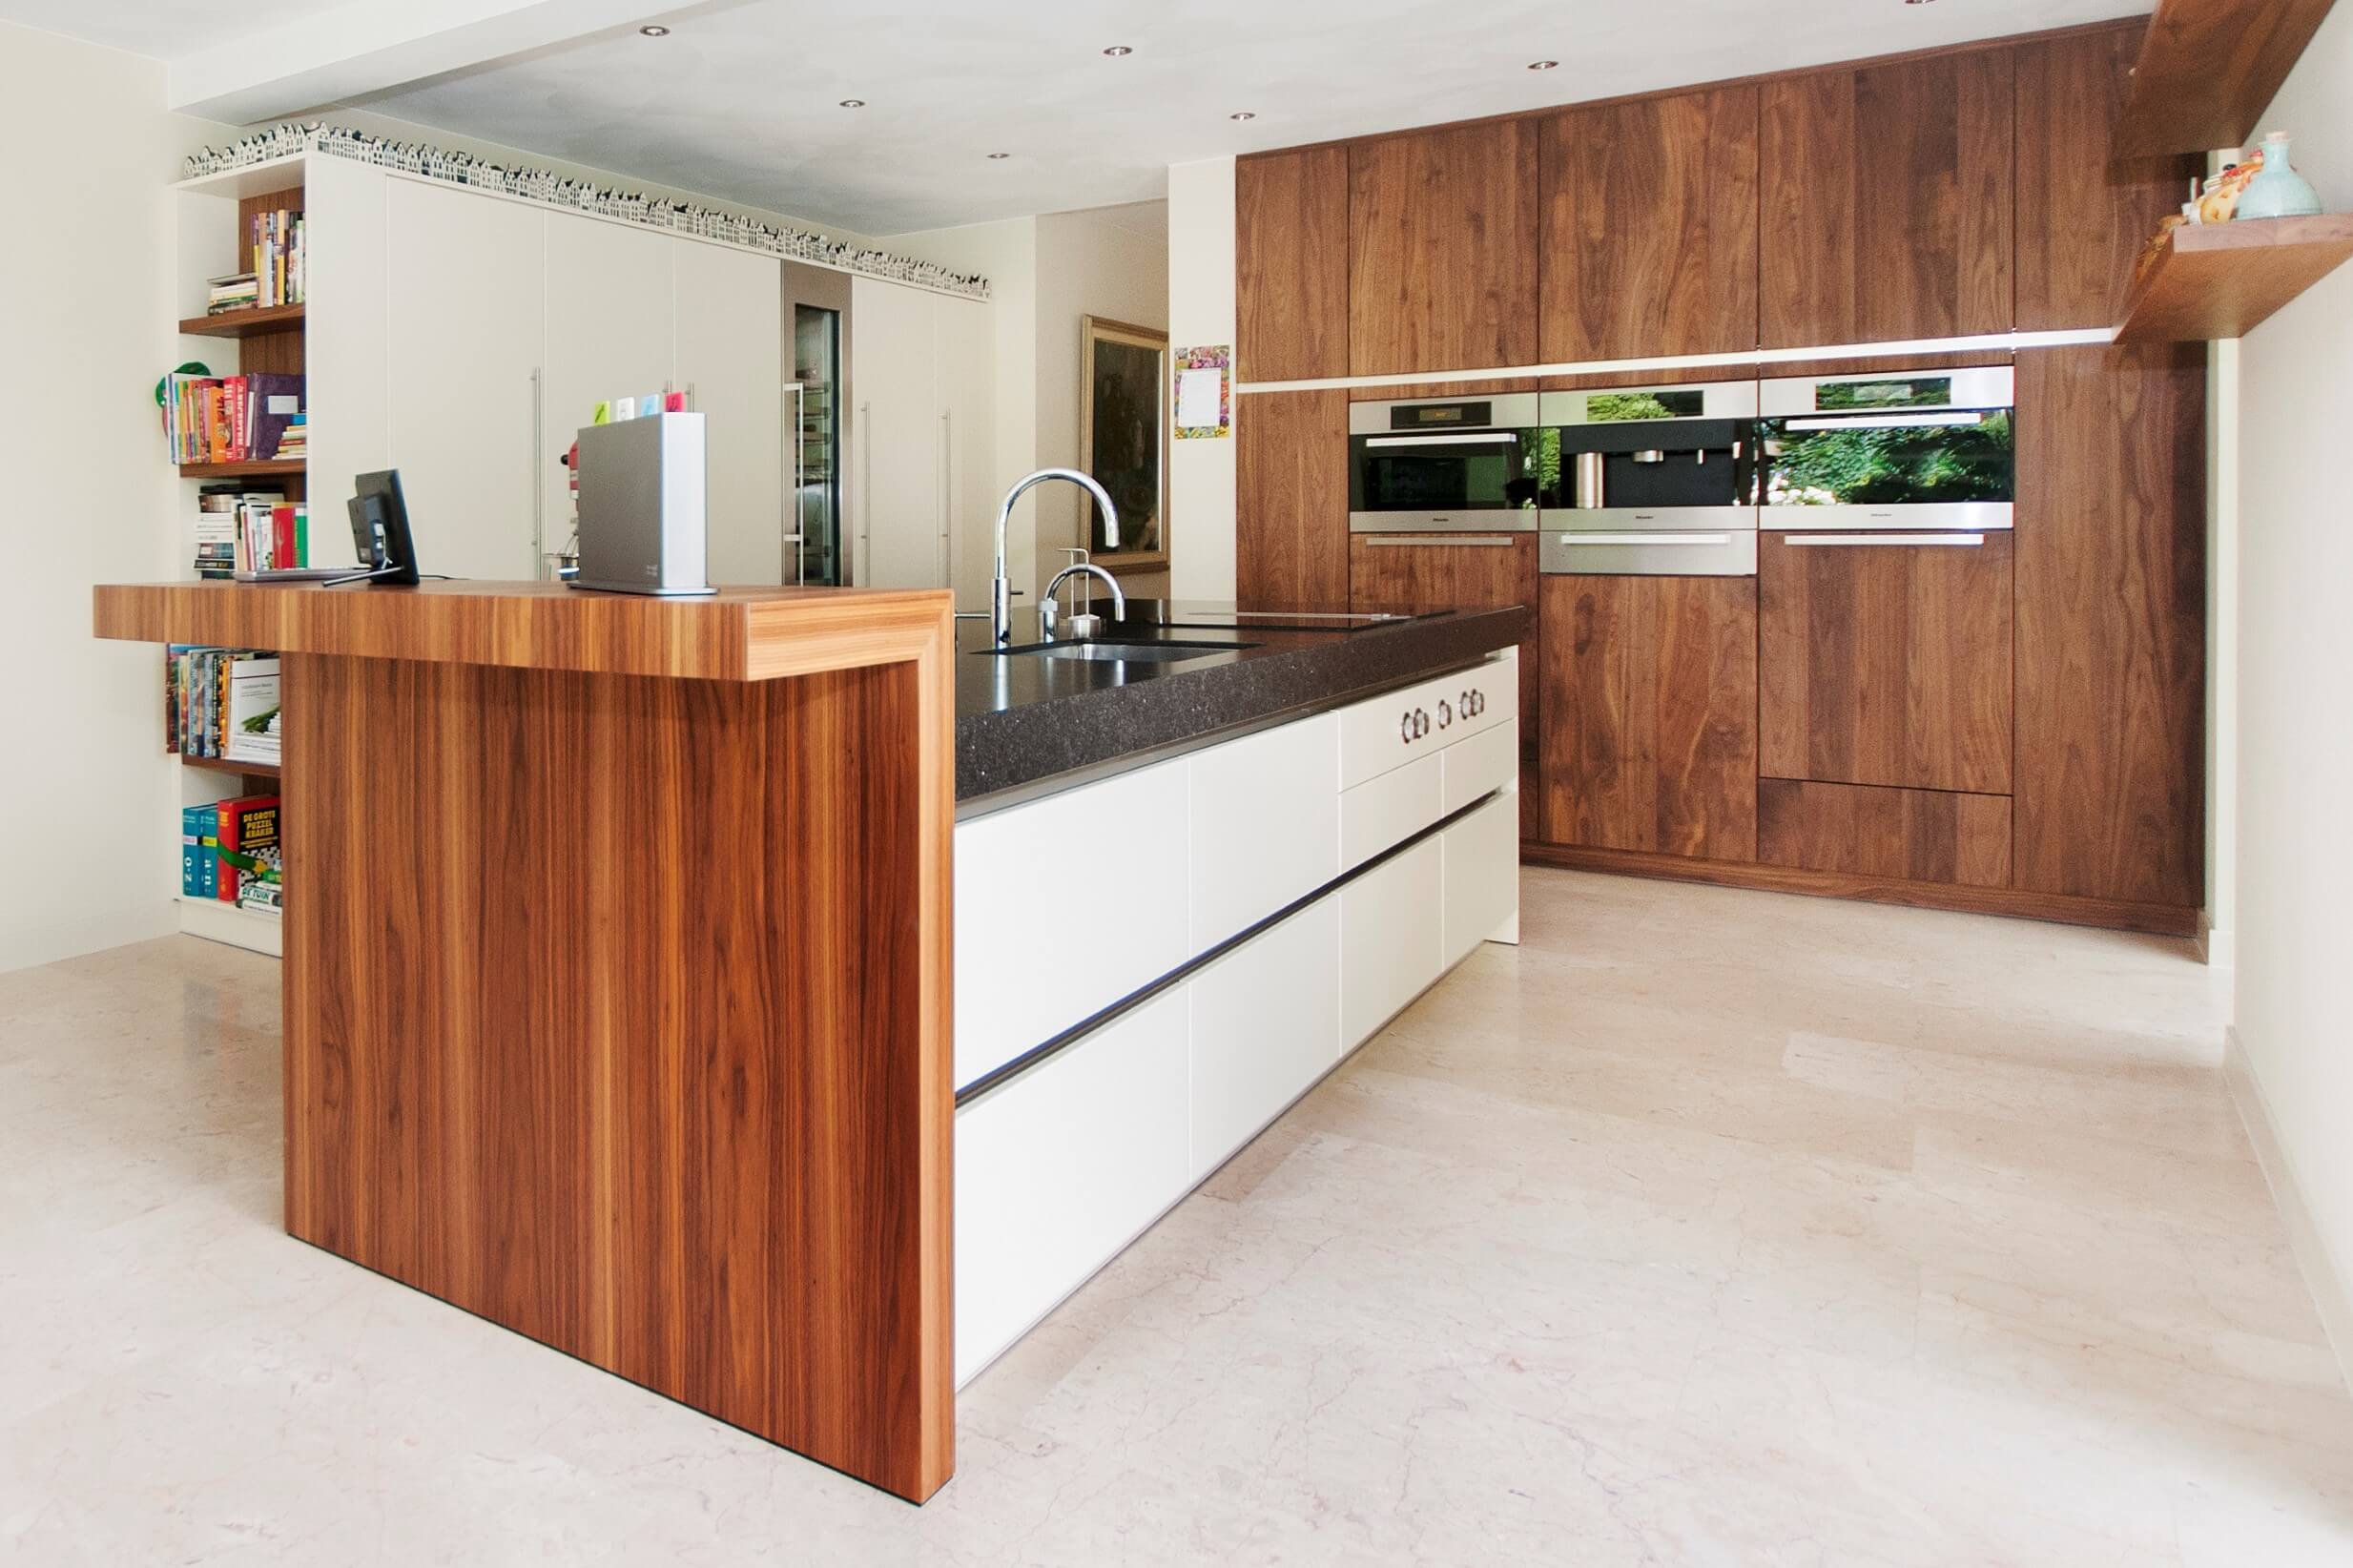 Greeploze moderne keuken icm hout, met Bora professional en Miele apparatuur